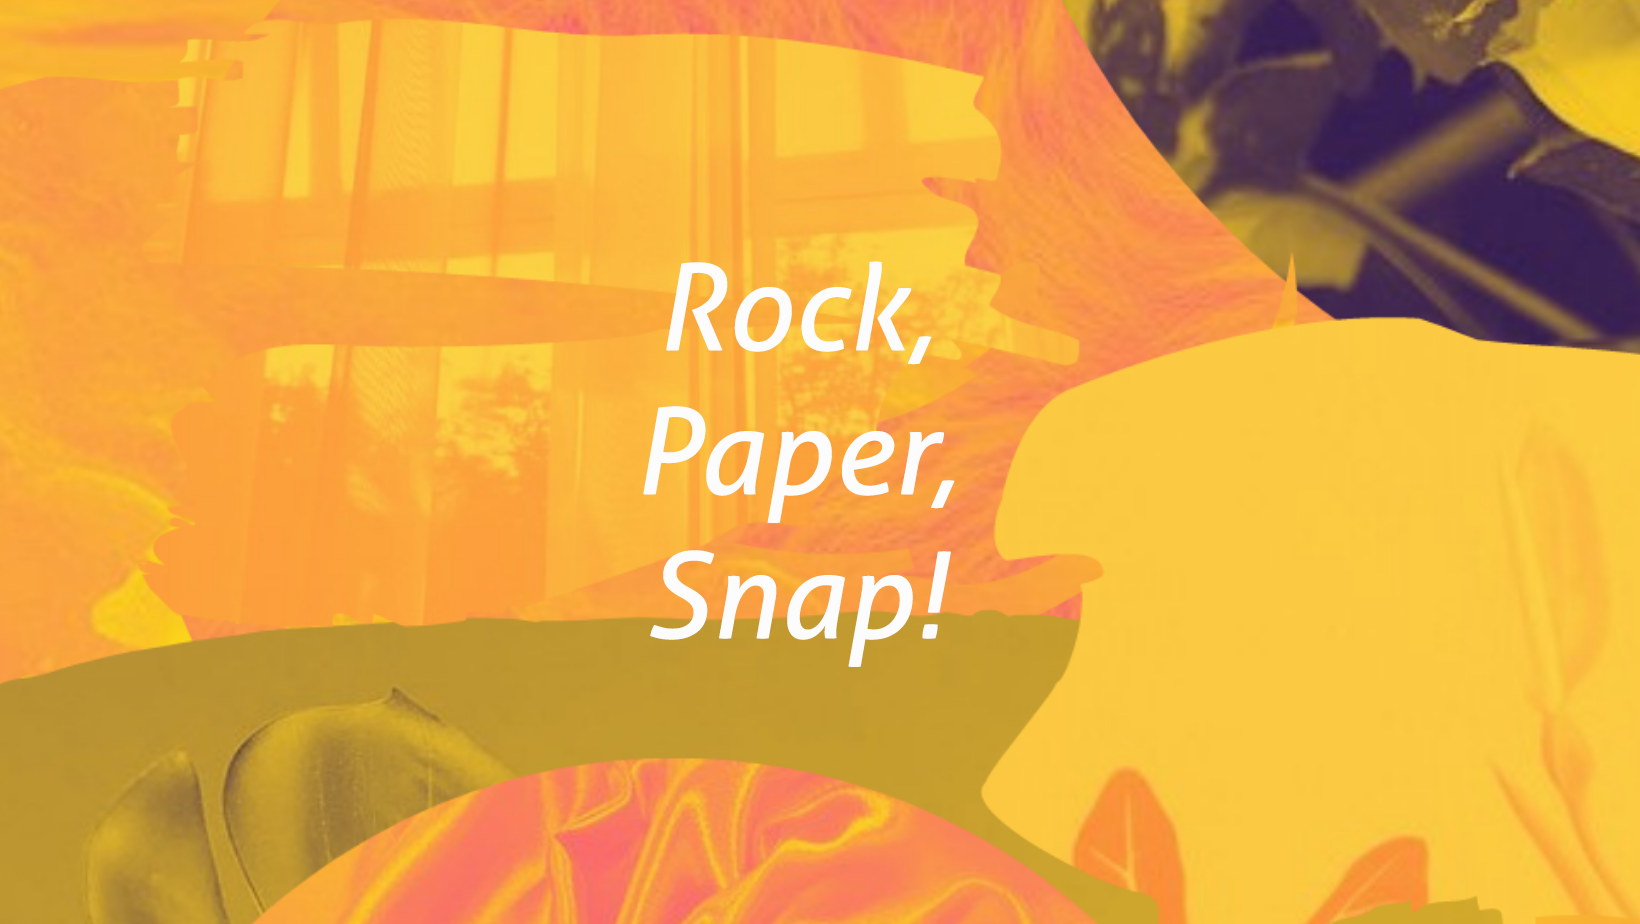 Utp Local - Rock, Paper, Snap!